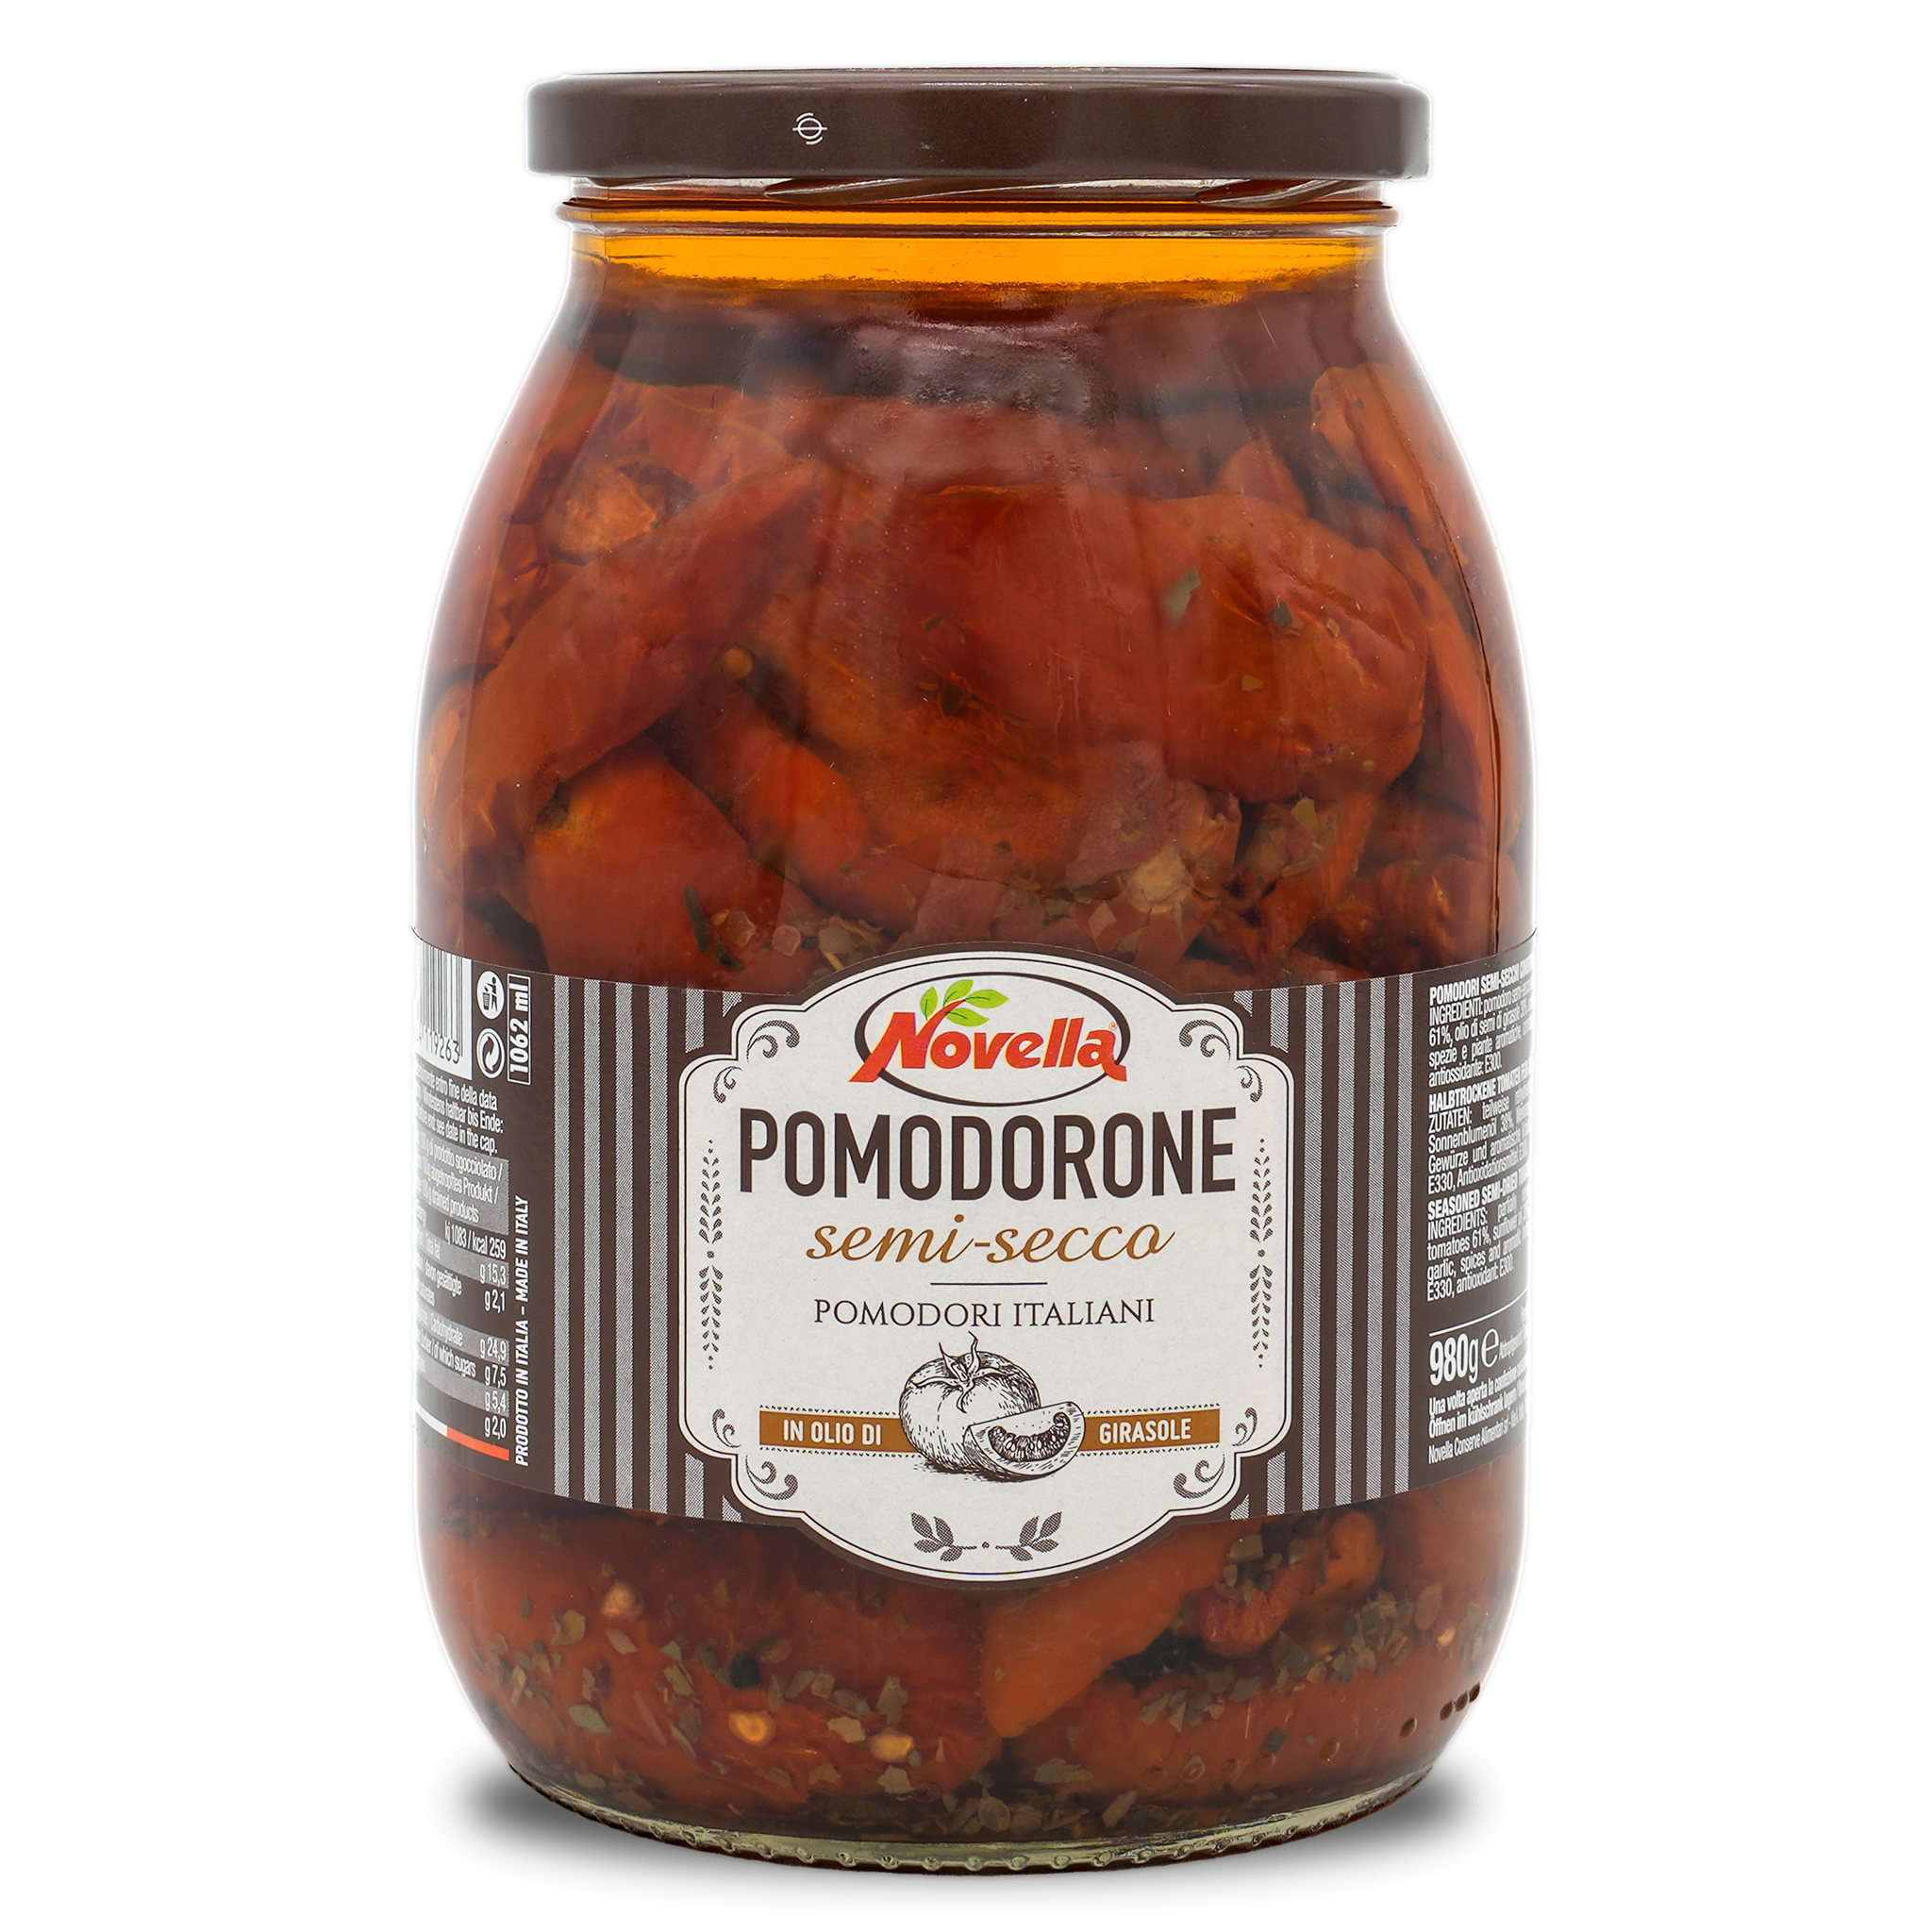 Halbgetrocknete Tomaten | Novella | Pomodorone semi-secco | in Sonnenblumenöl | 600g | aus Italien